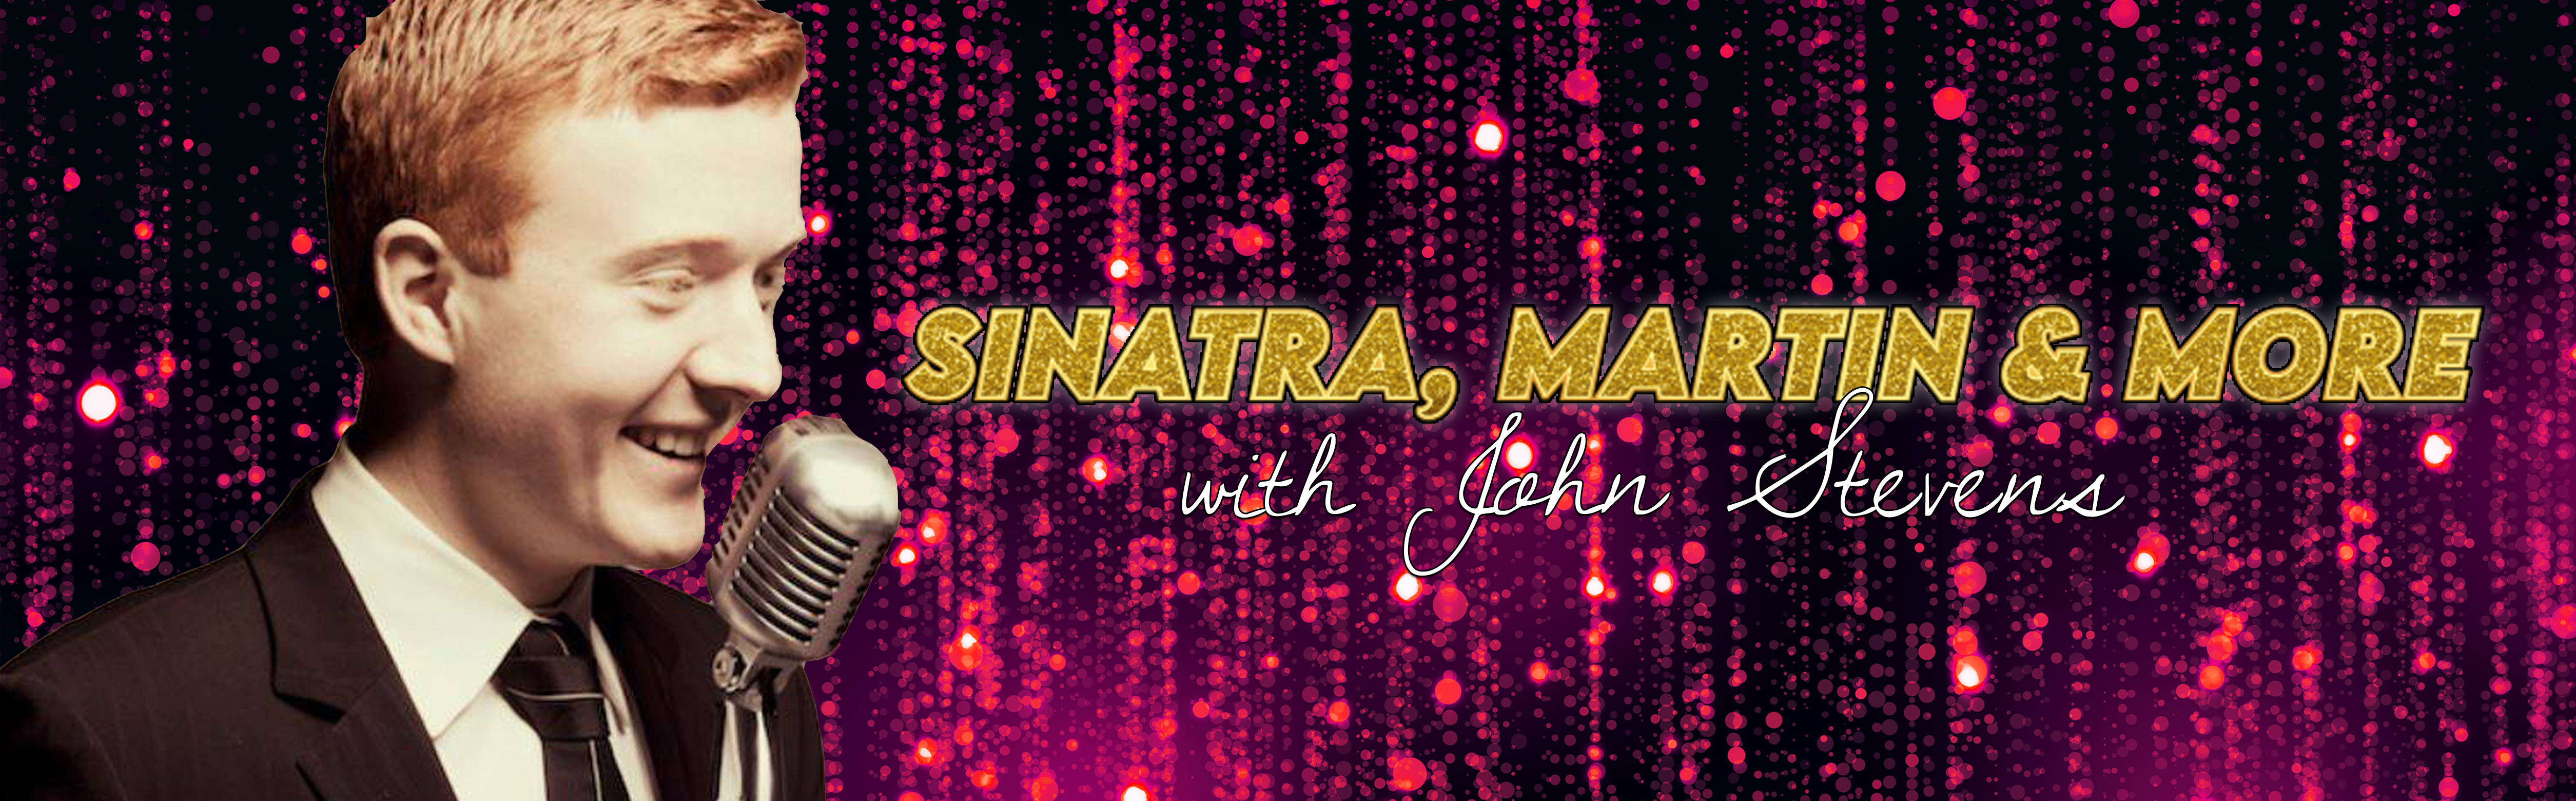 Sinatra, Martin, & More with John Stevens